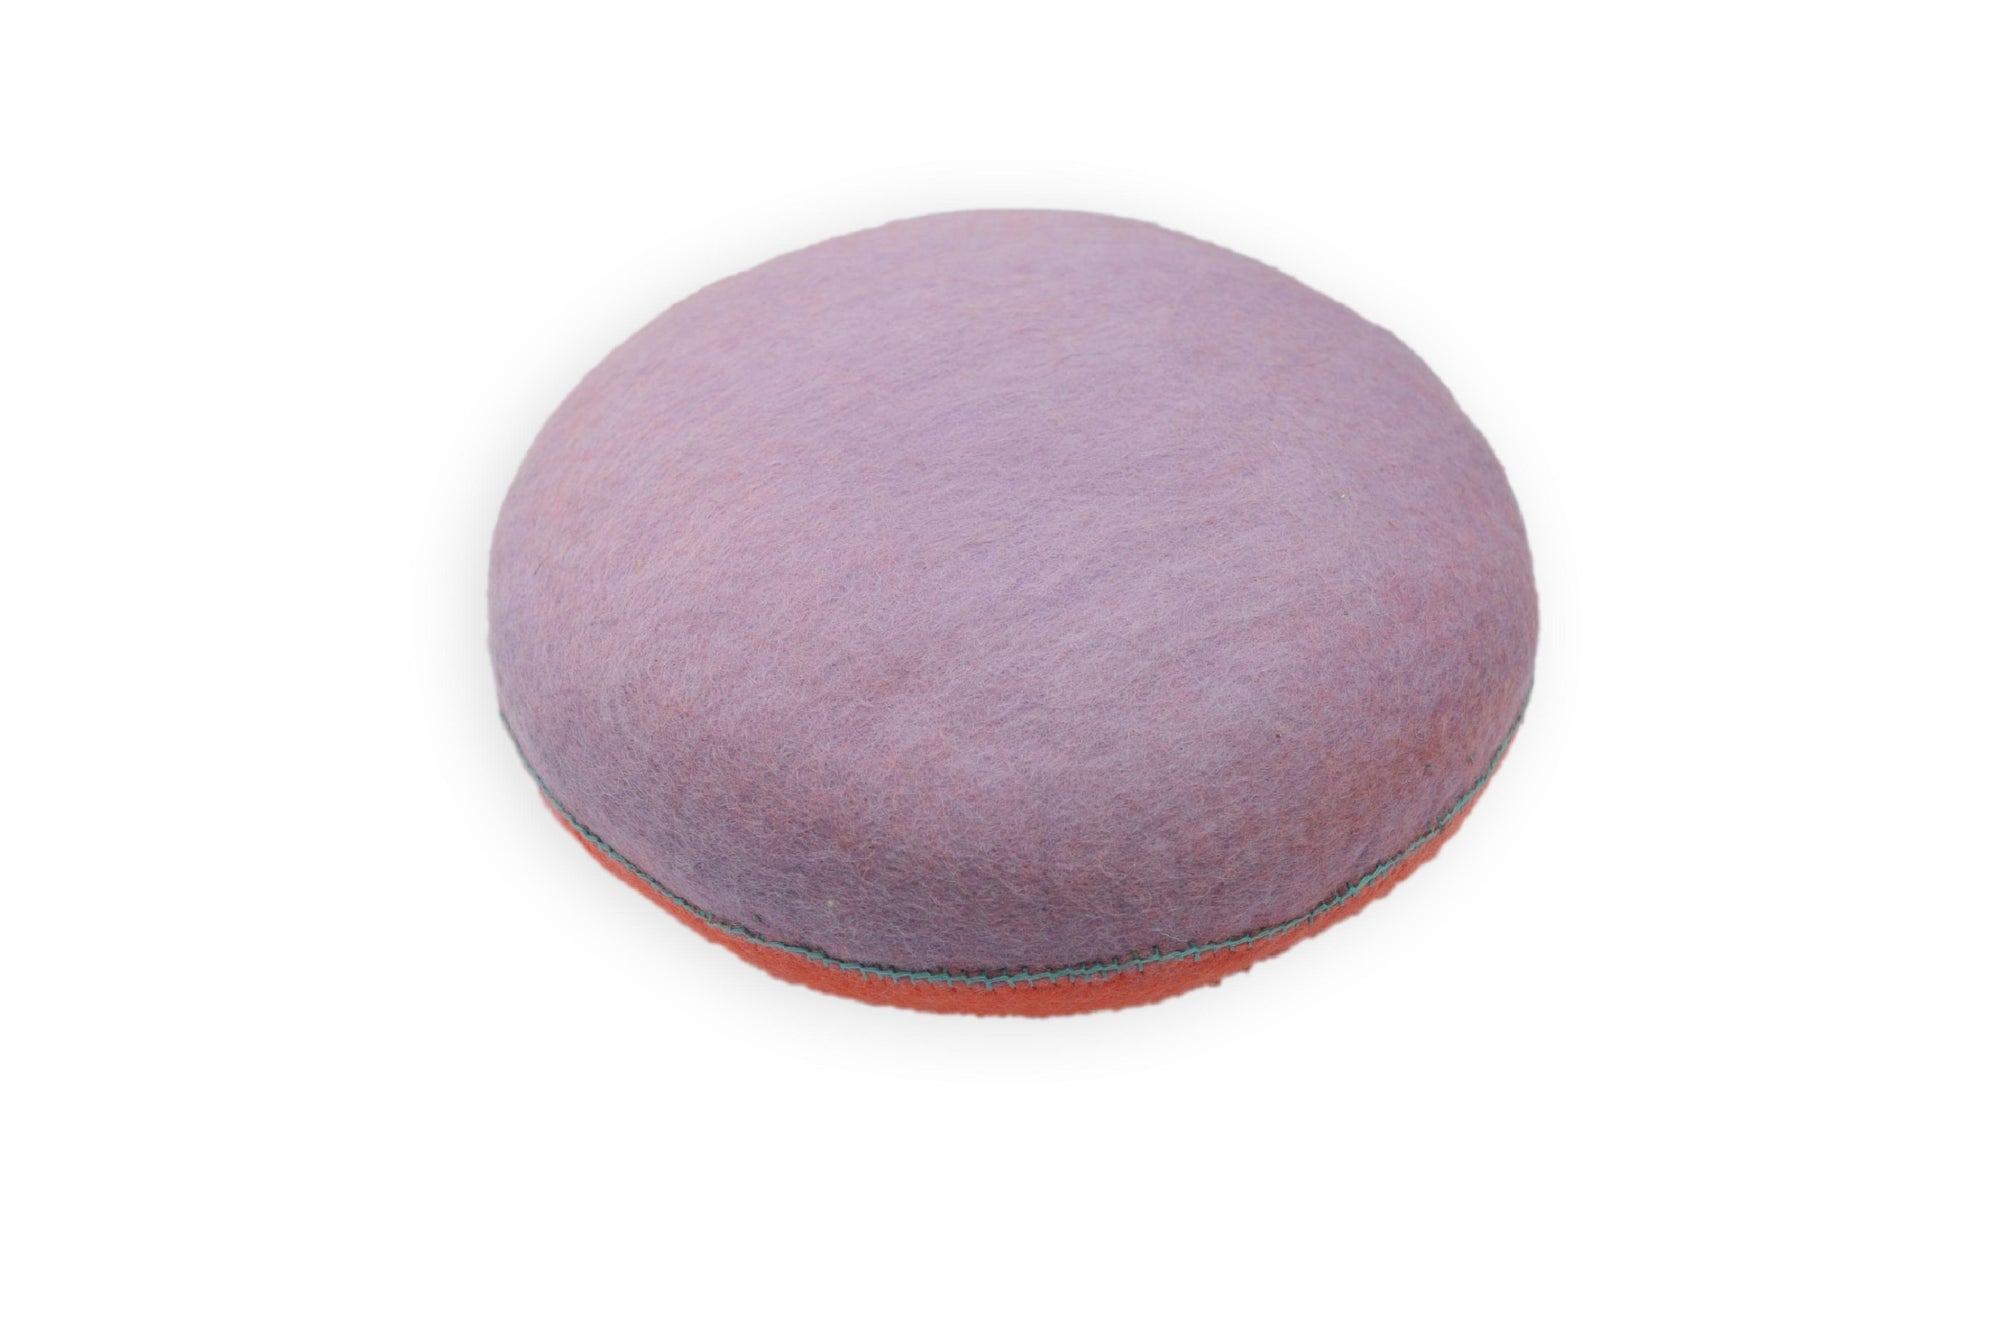 Two-tone Felt Cushion in lilac / apricot-Fun-Little Fish Co.